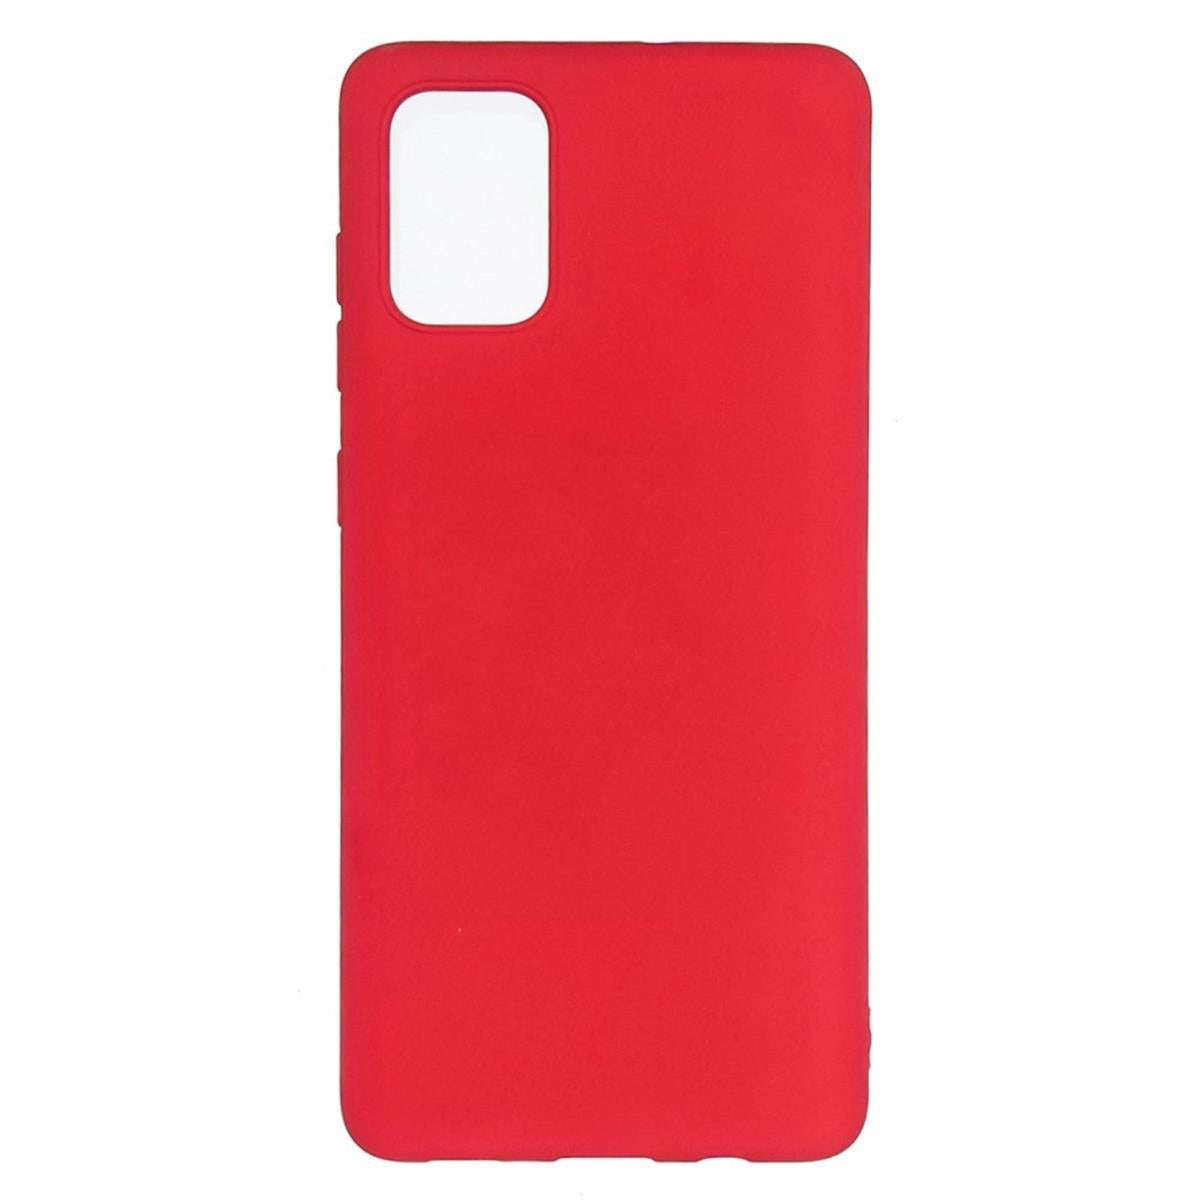 Hülle für Samsung Galaxy M31 Handyhülle Silikon Case Cover Schutzhülle Matt Rot